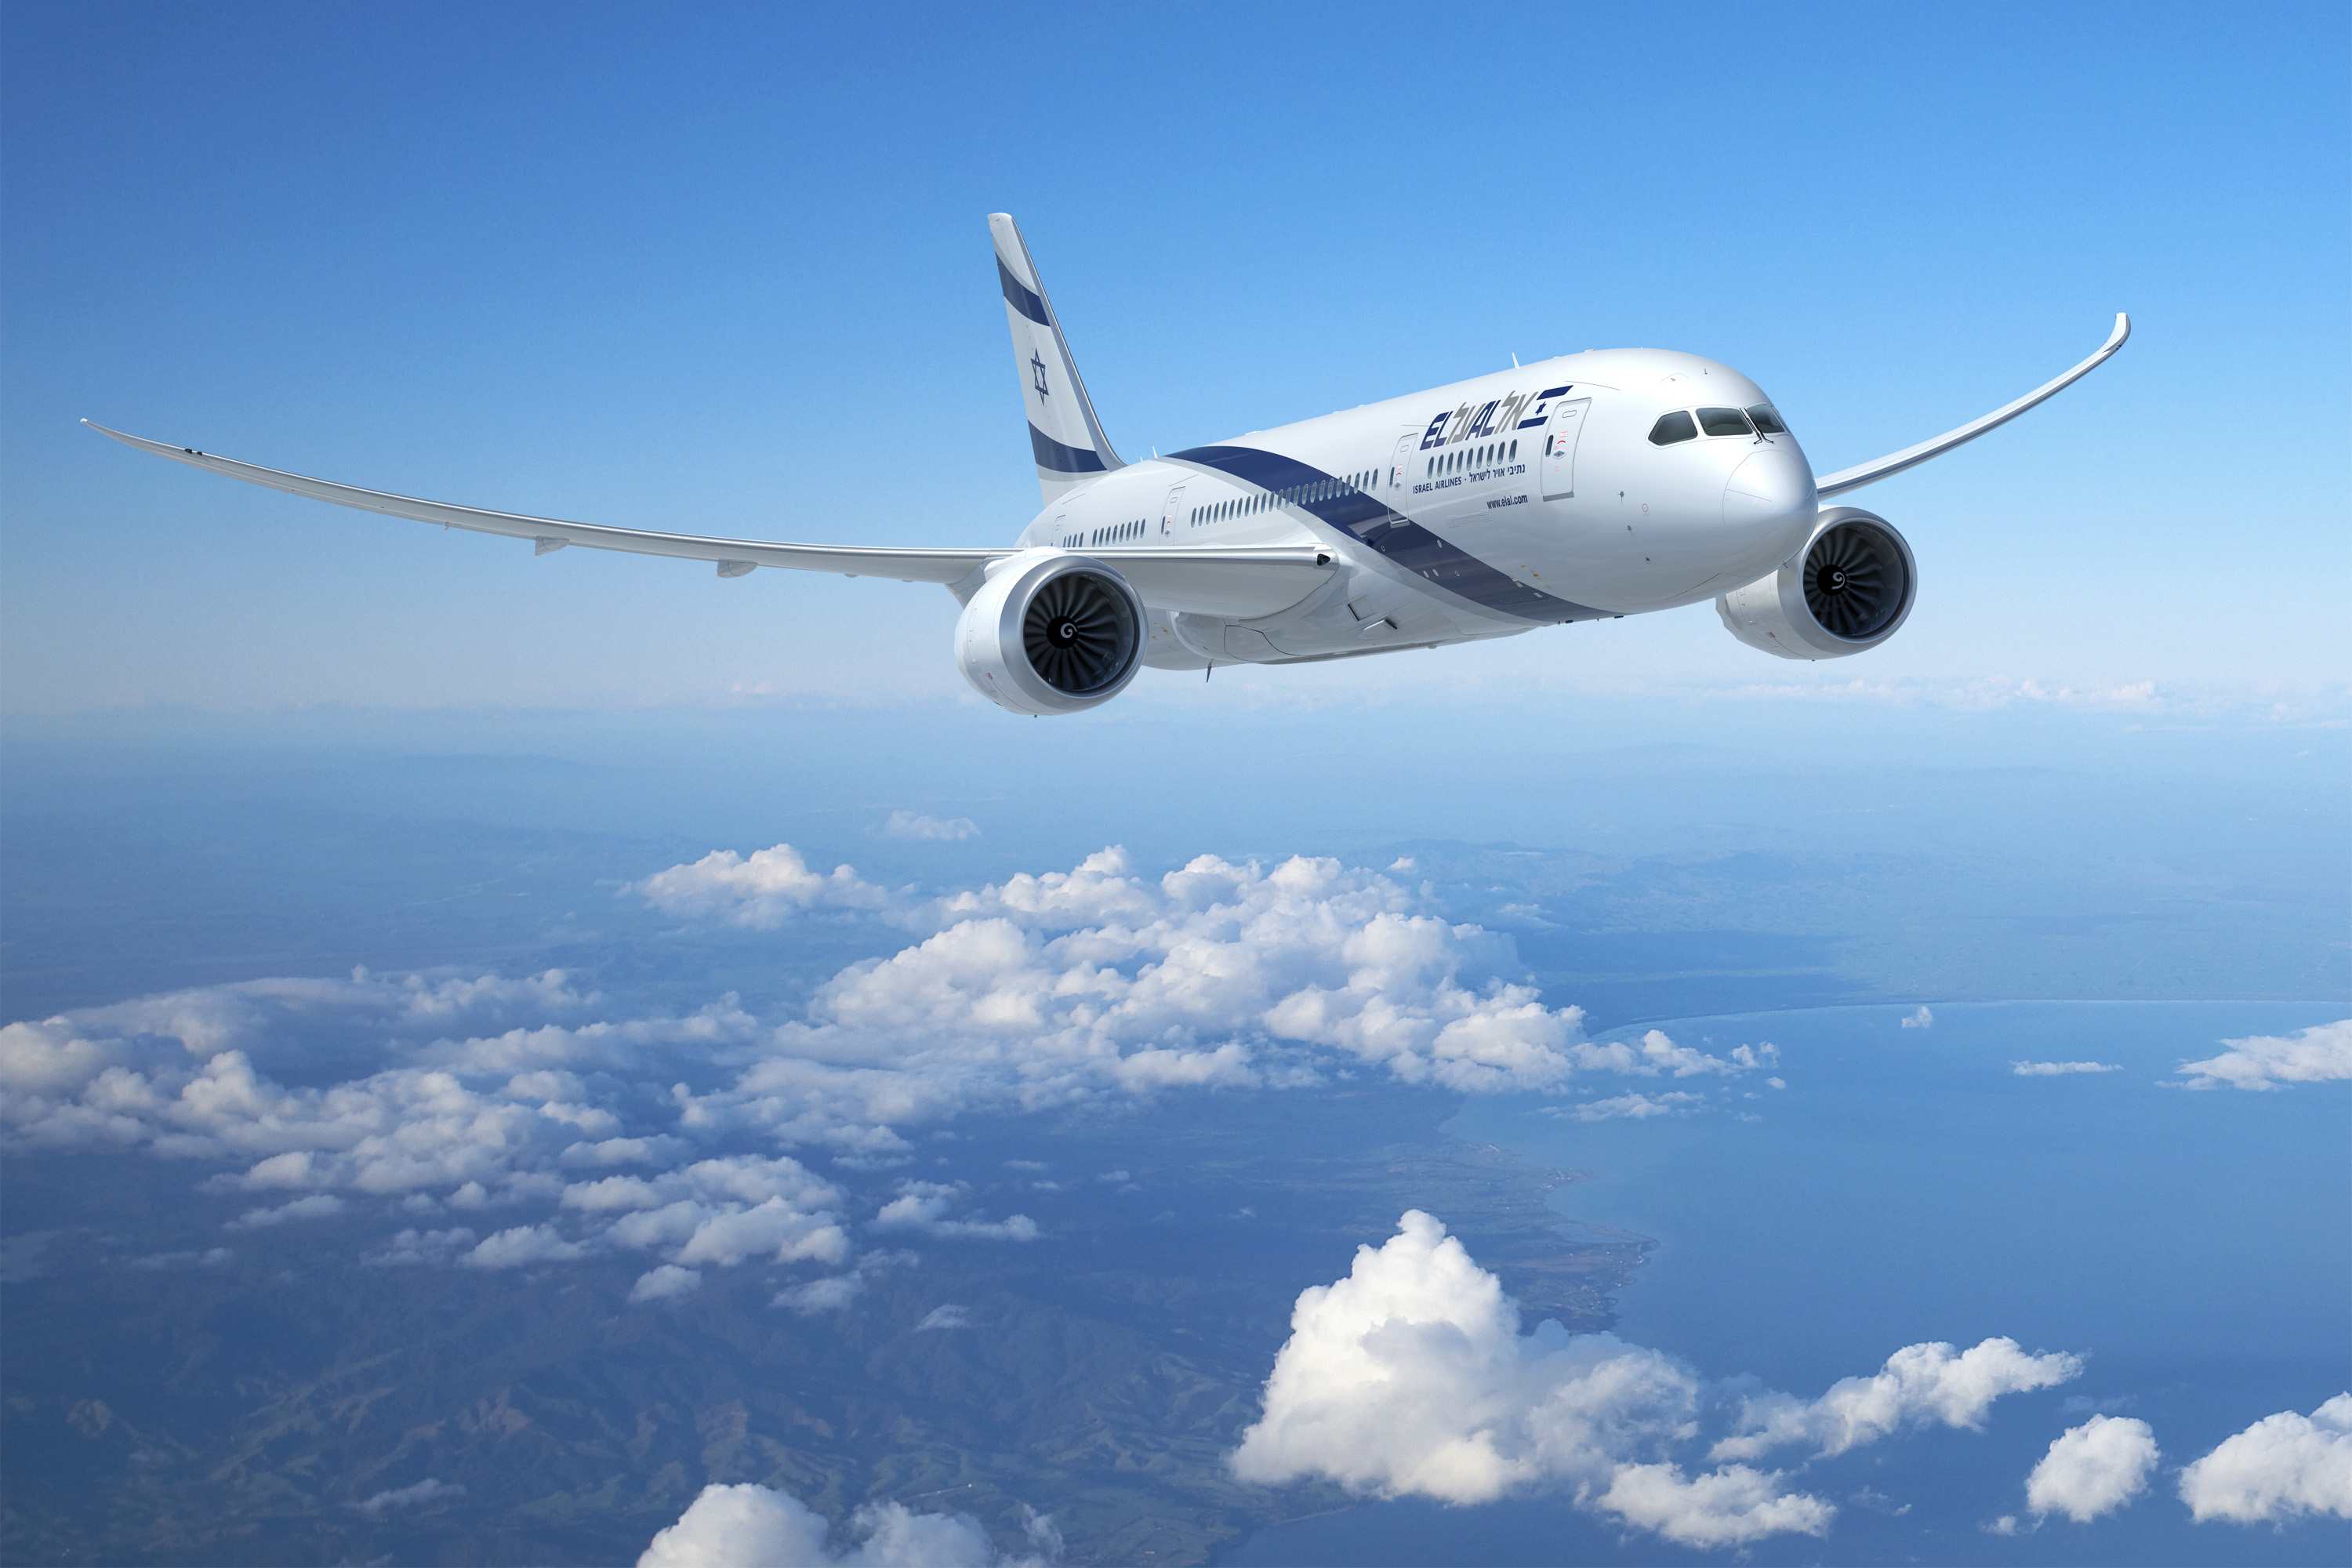 EL AL Israel Airlines expands its fleet with the Dreamliner